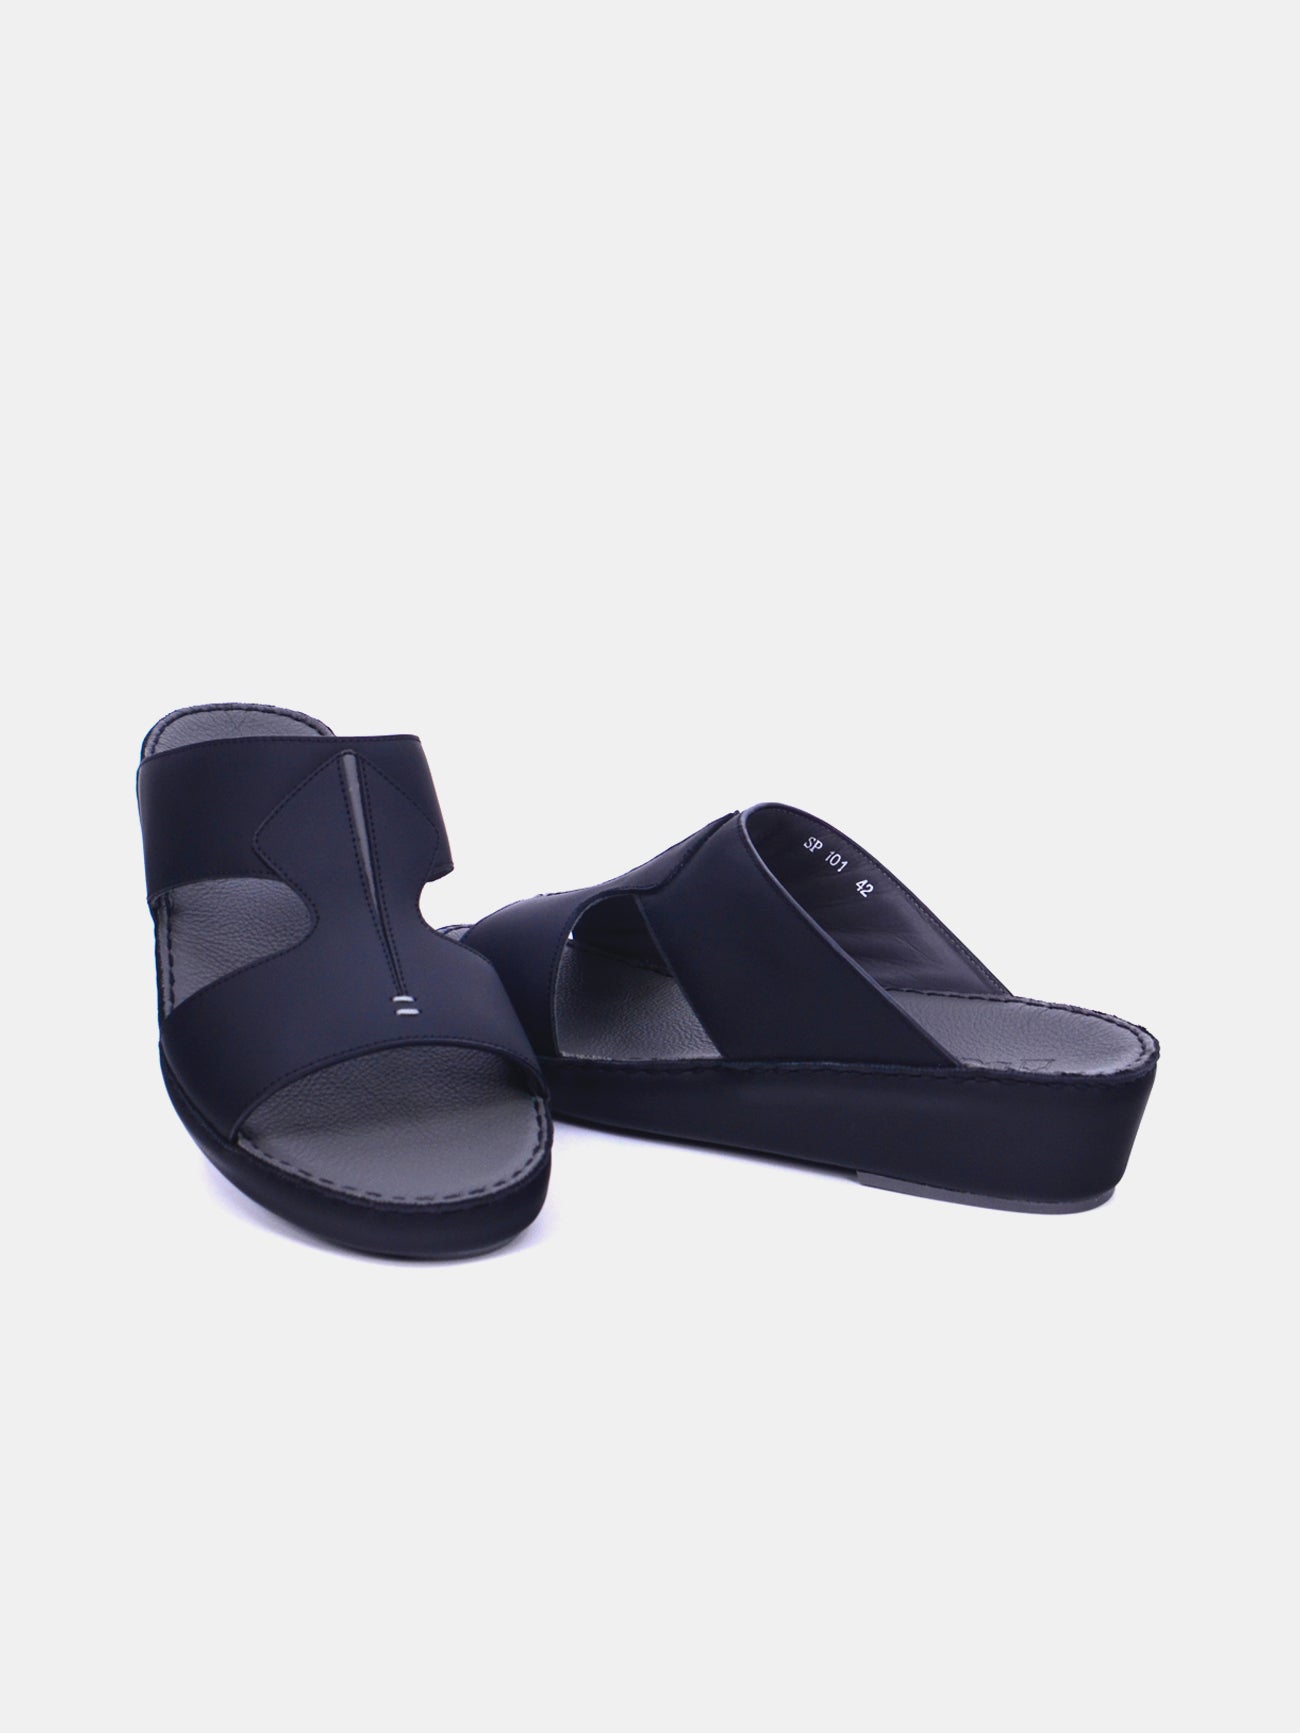 Barjeel Uno SP-101 Men's Sandals #color_Black